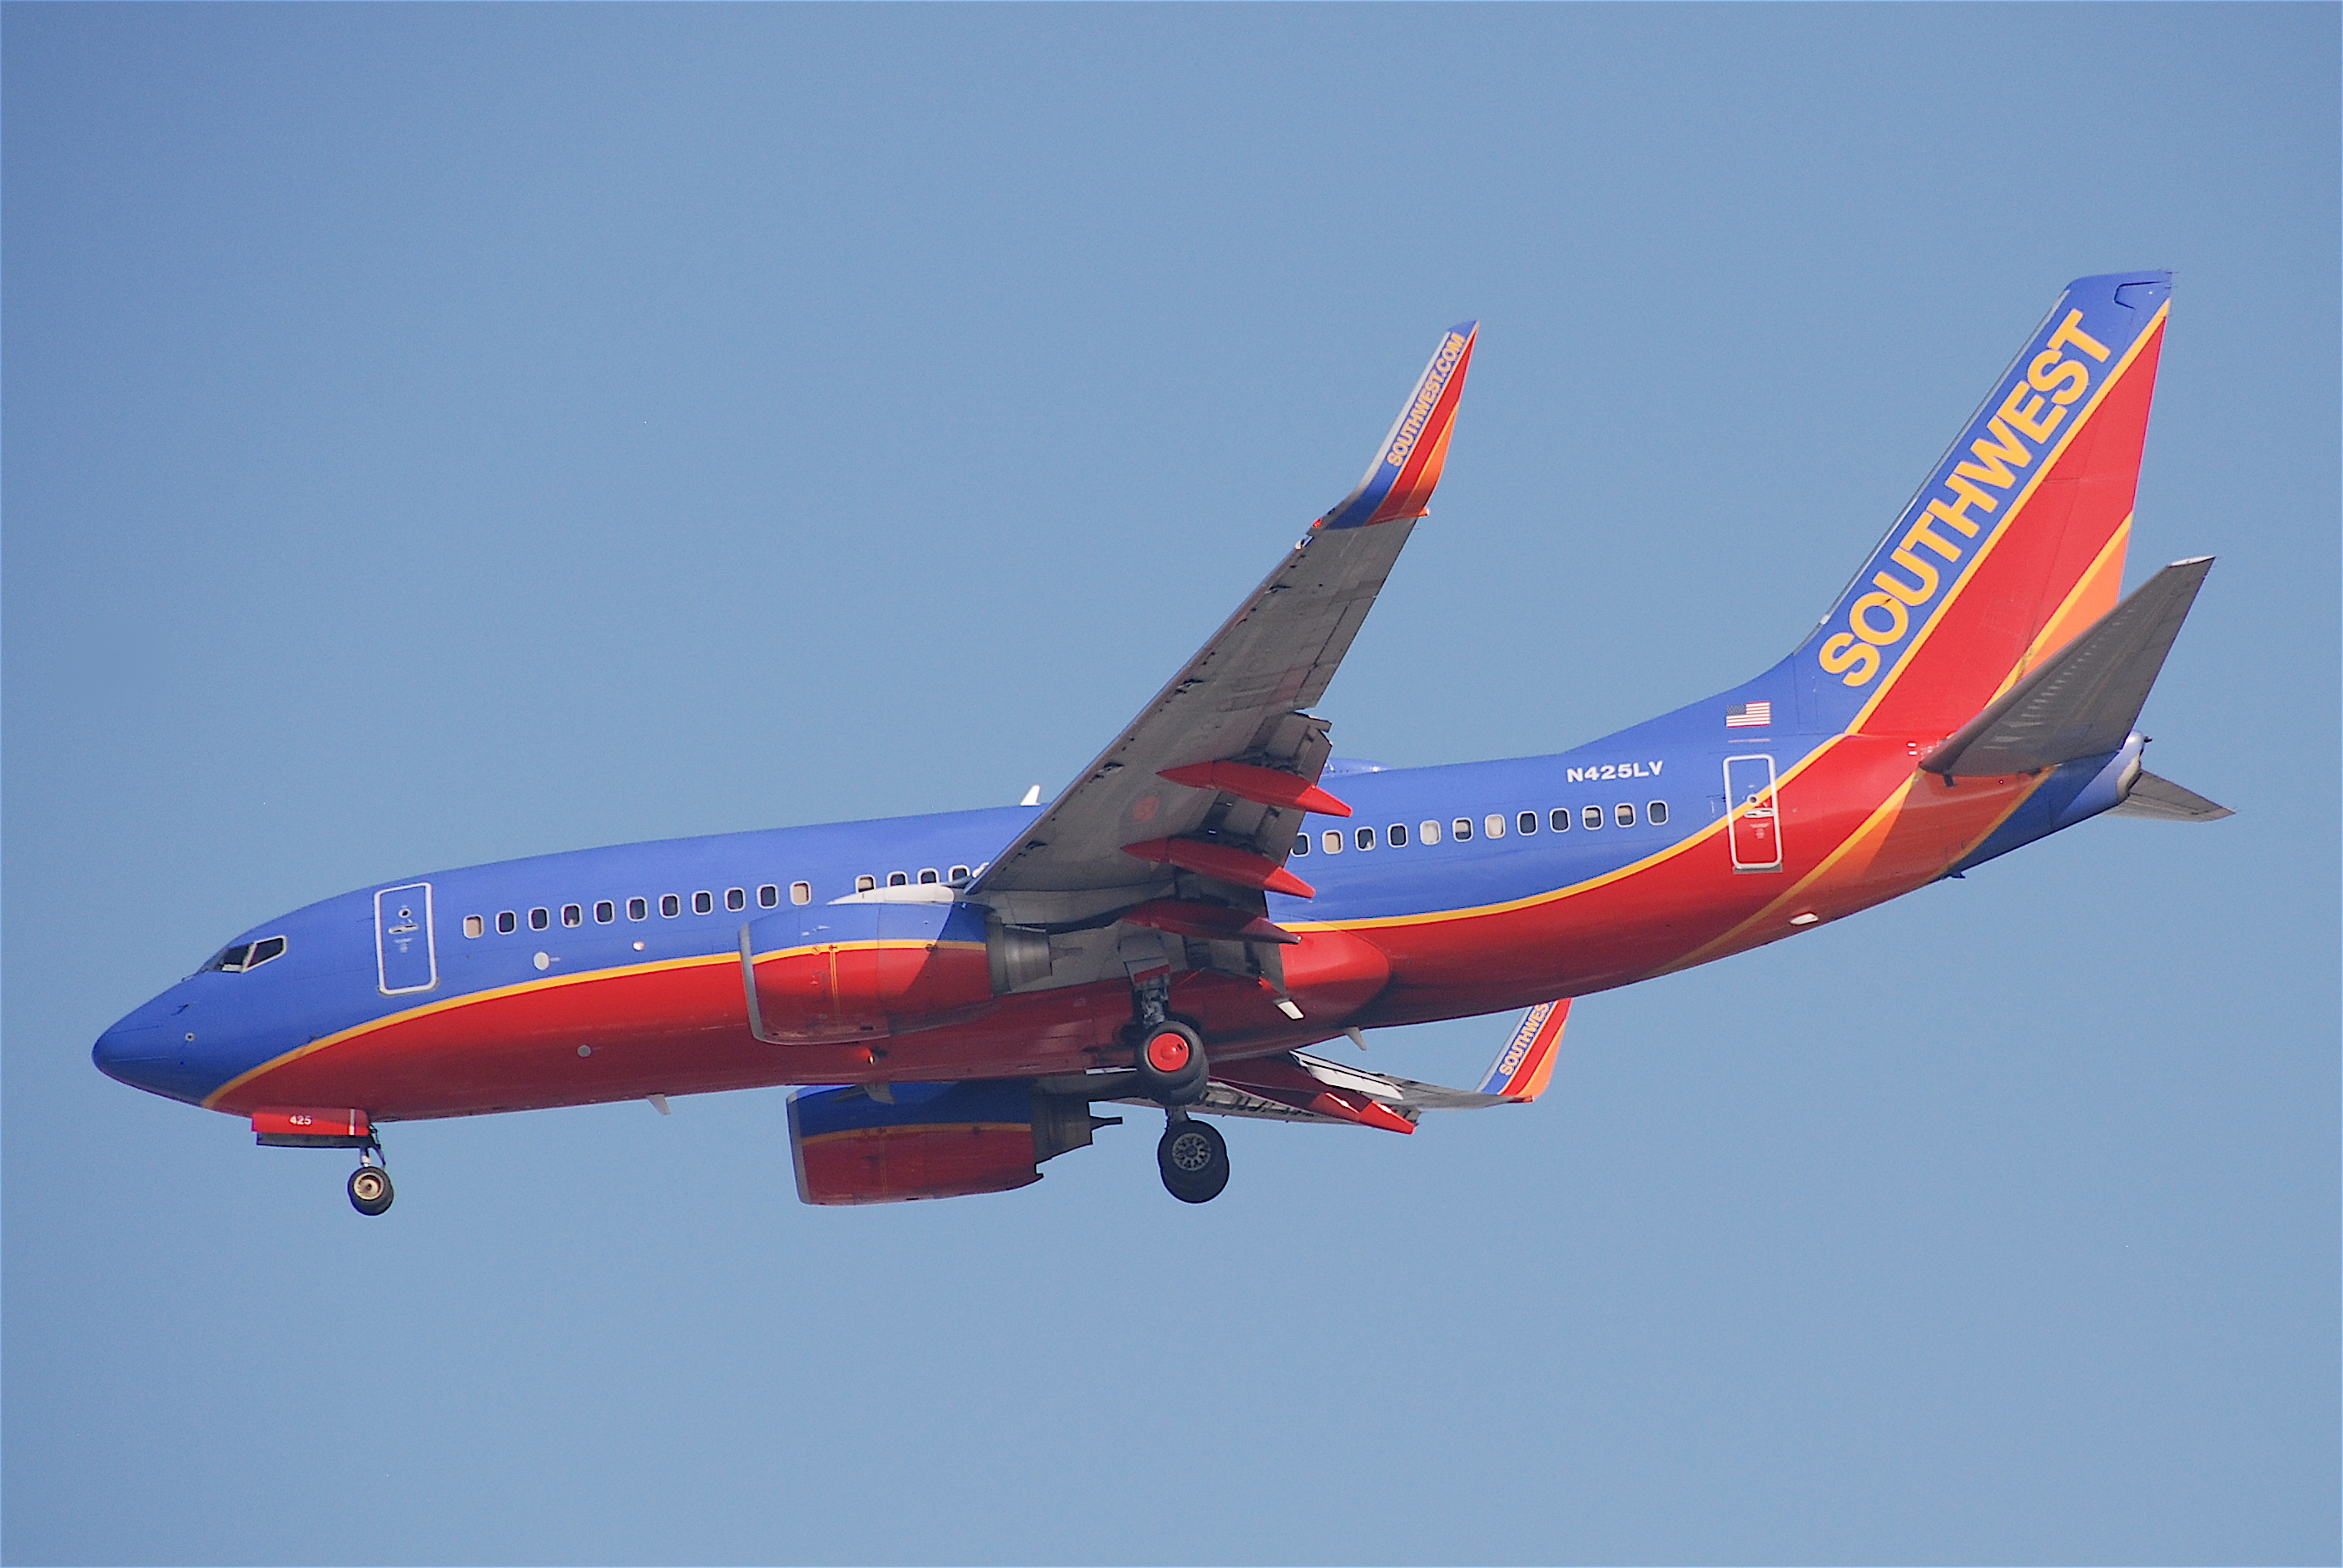 Southwest Airlines Boeing 737-700; N425LV@LAX;11.10.2011 623bg (6643778289)